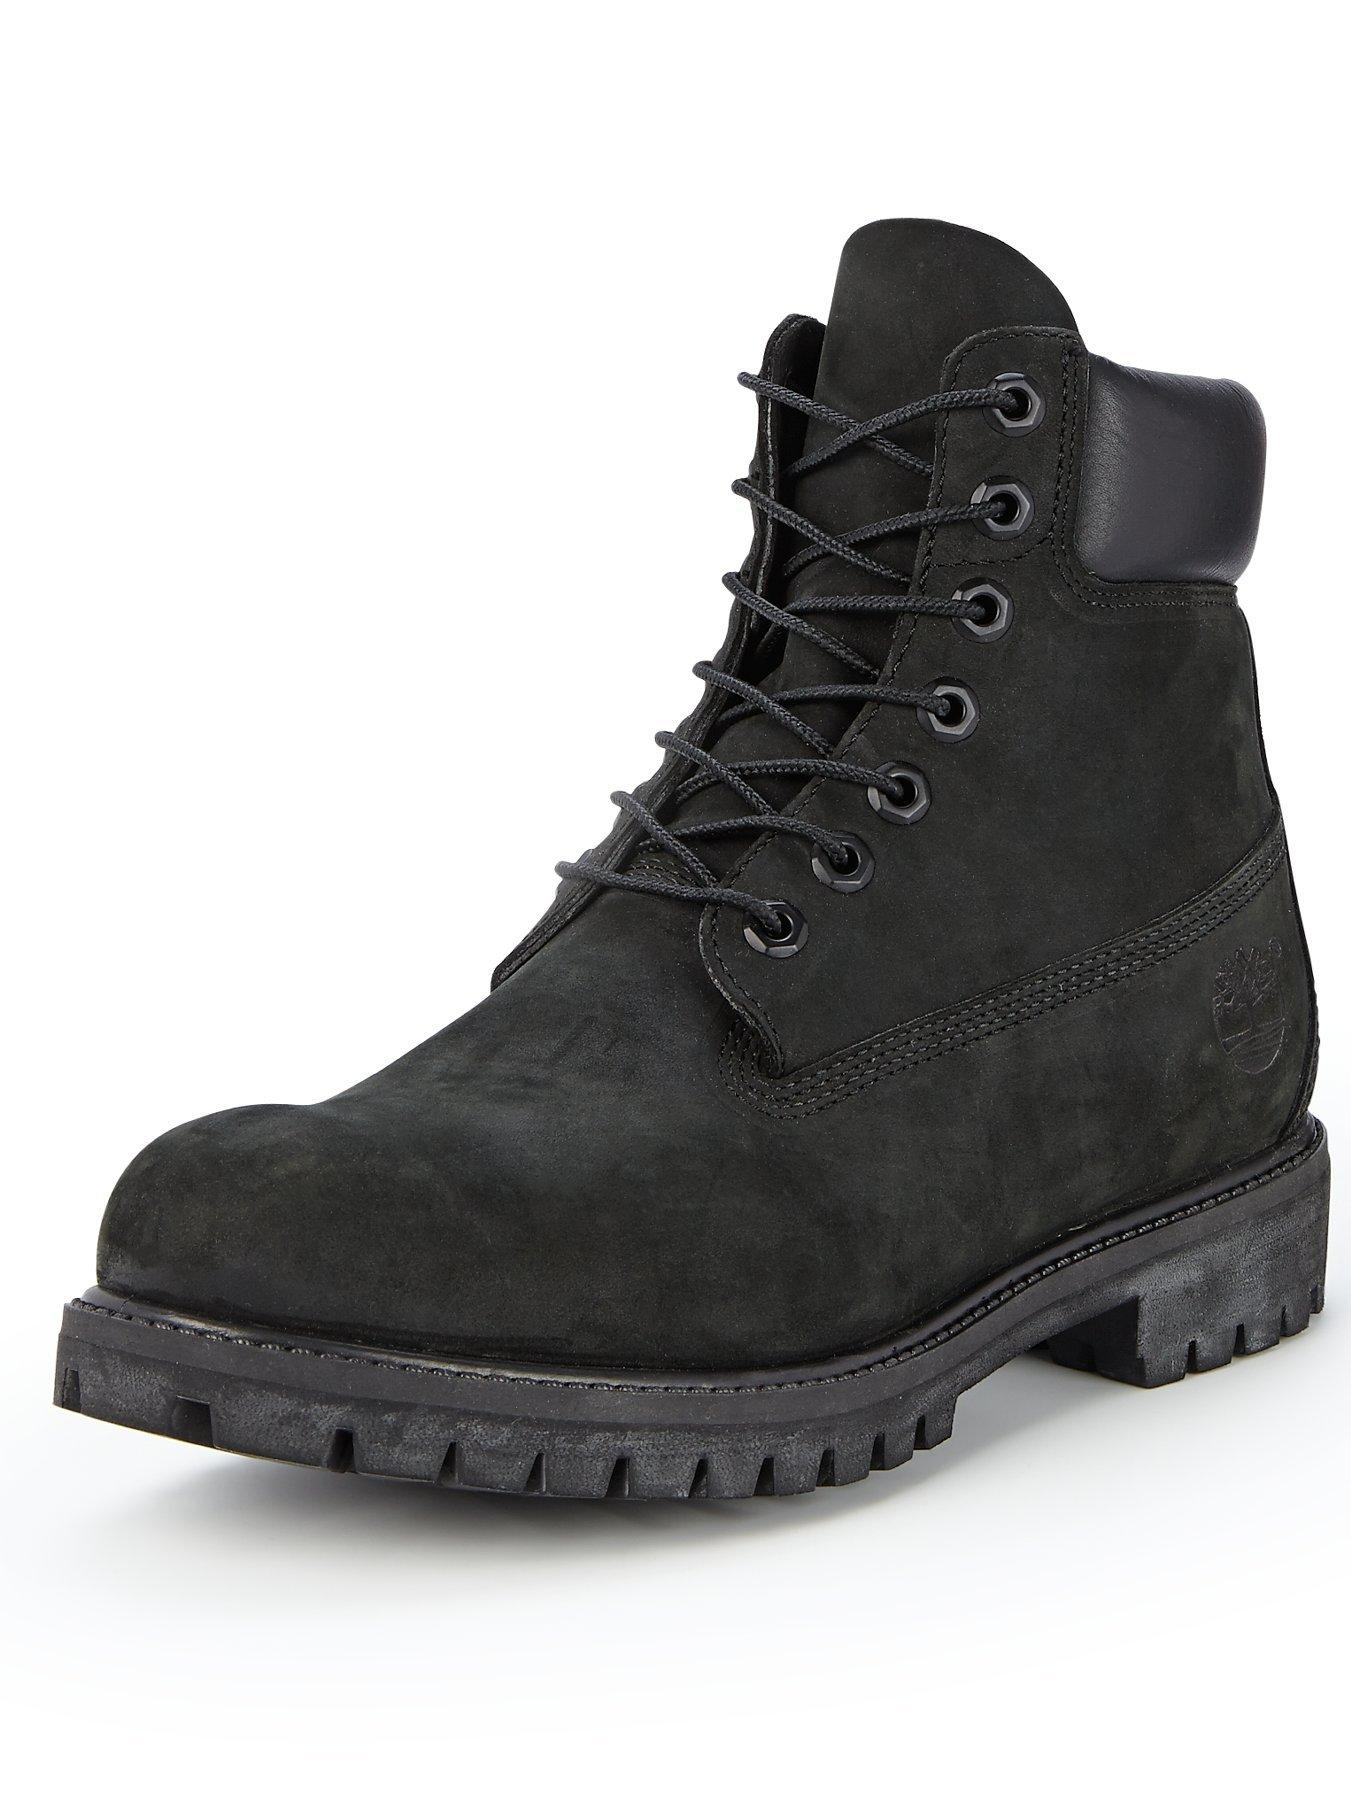 timberland boots black